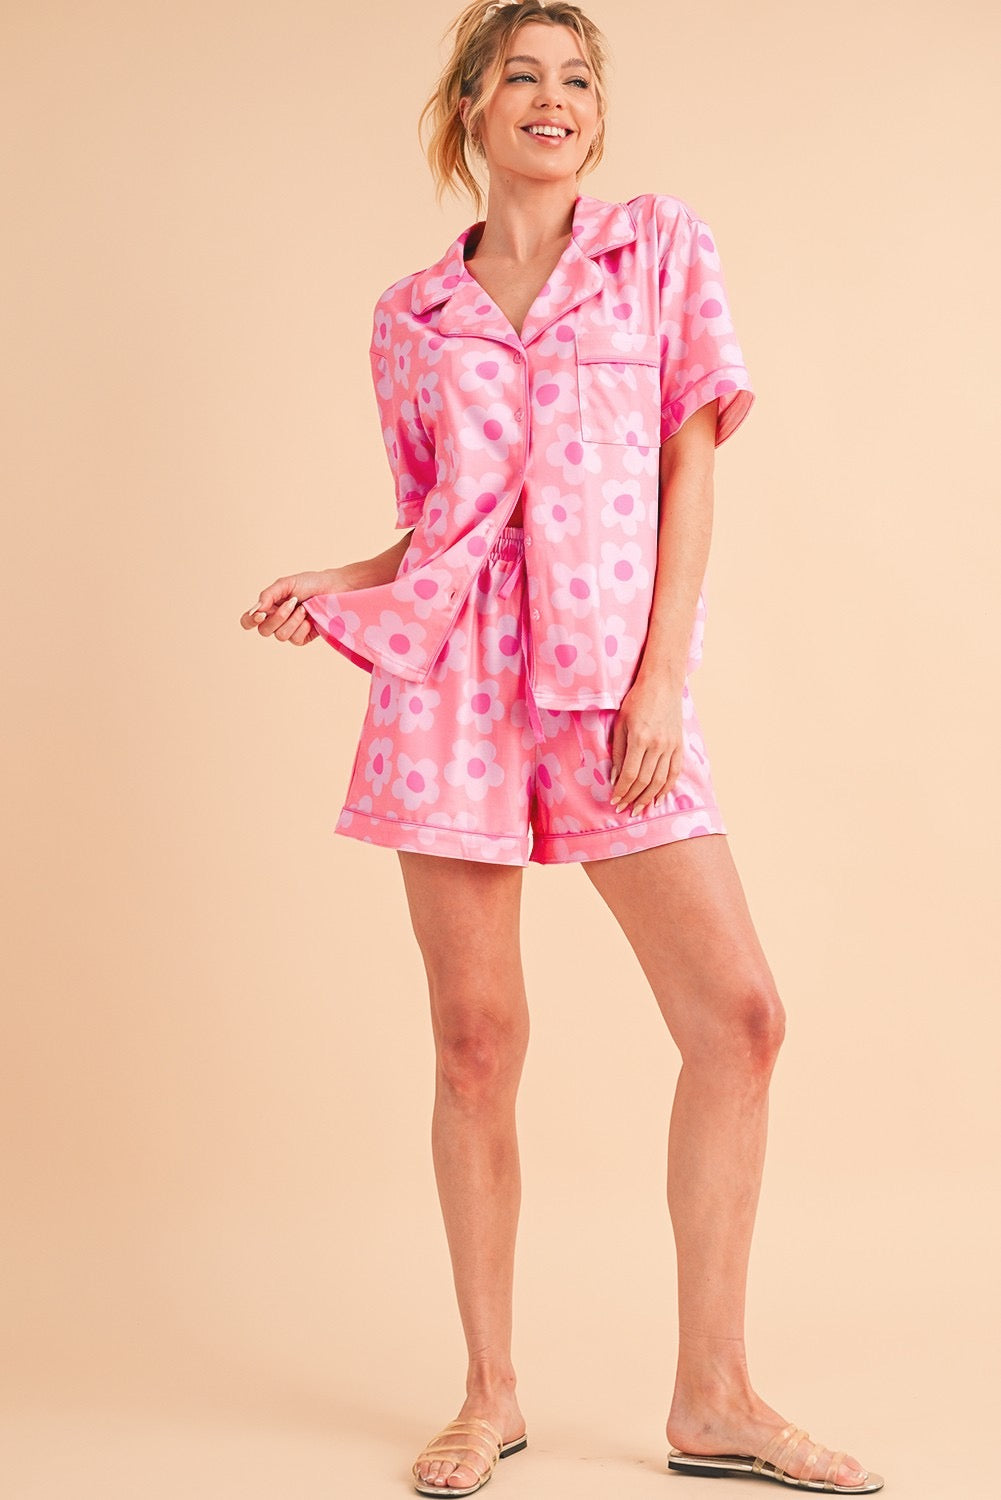 Floral Pajama Set - Spicy Chic Boutique